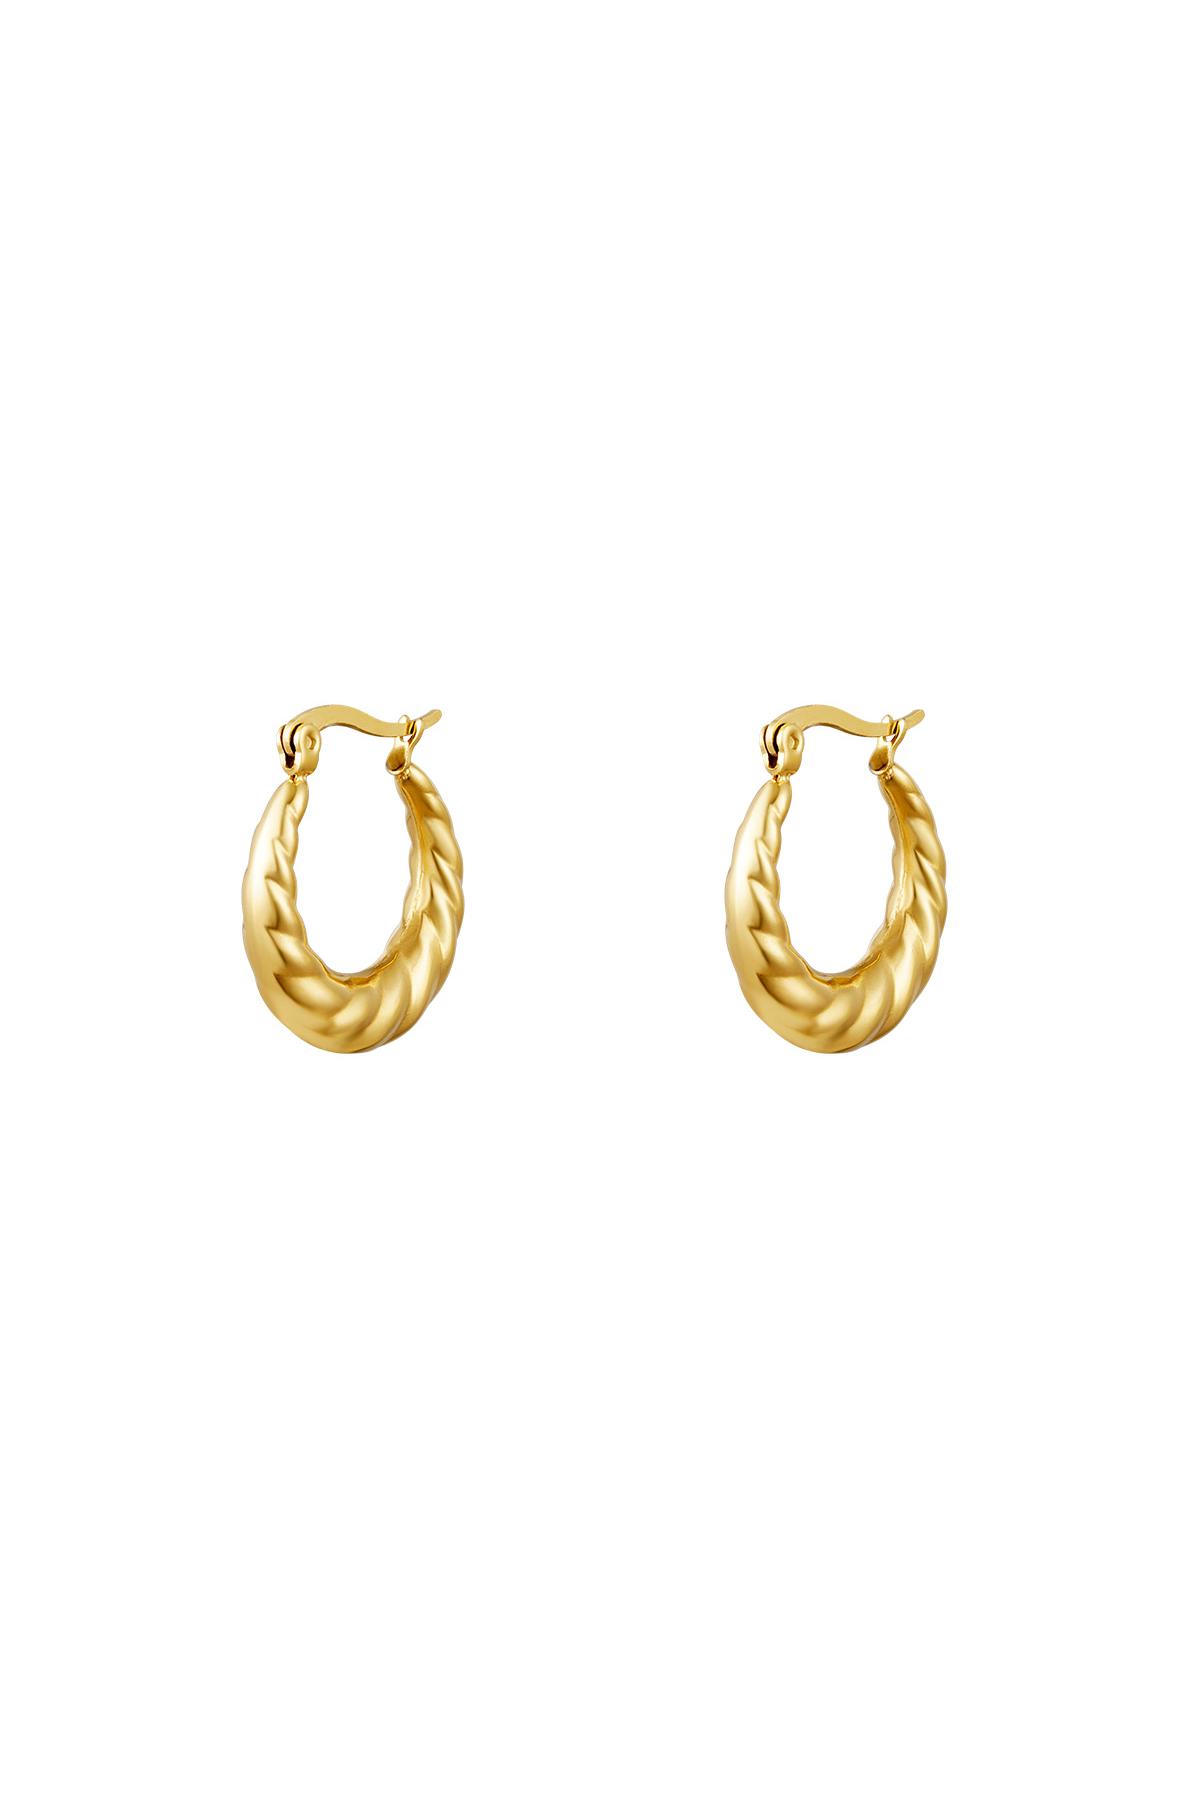 Earrings Baguette Gold Stainless Steel h5 